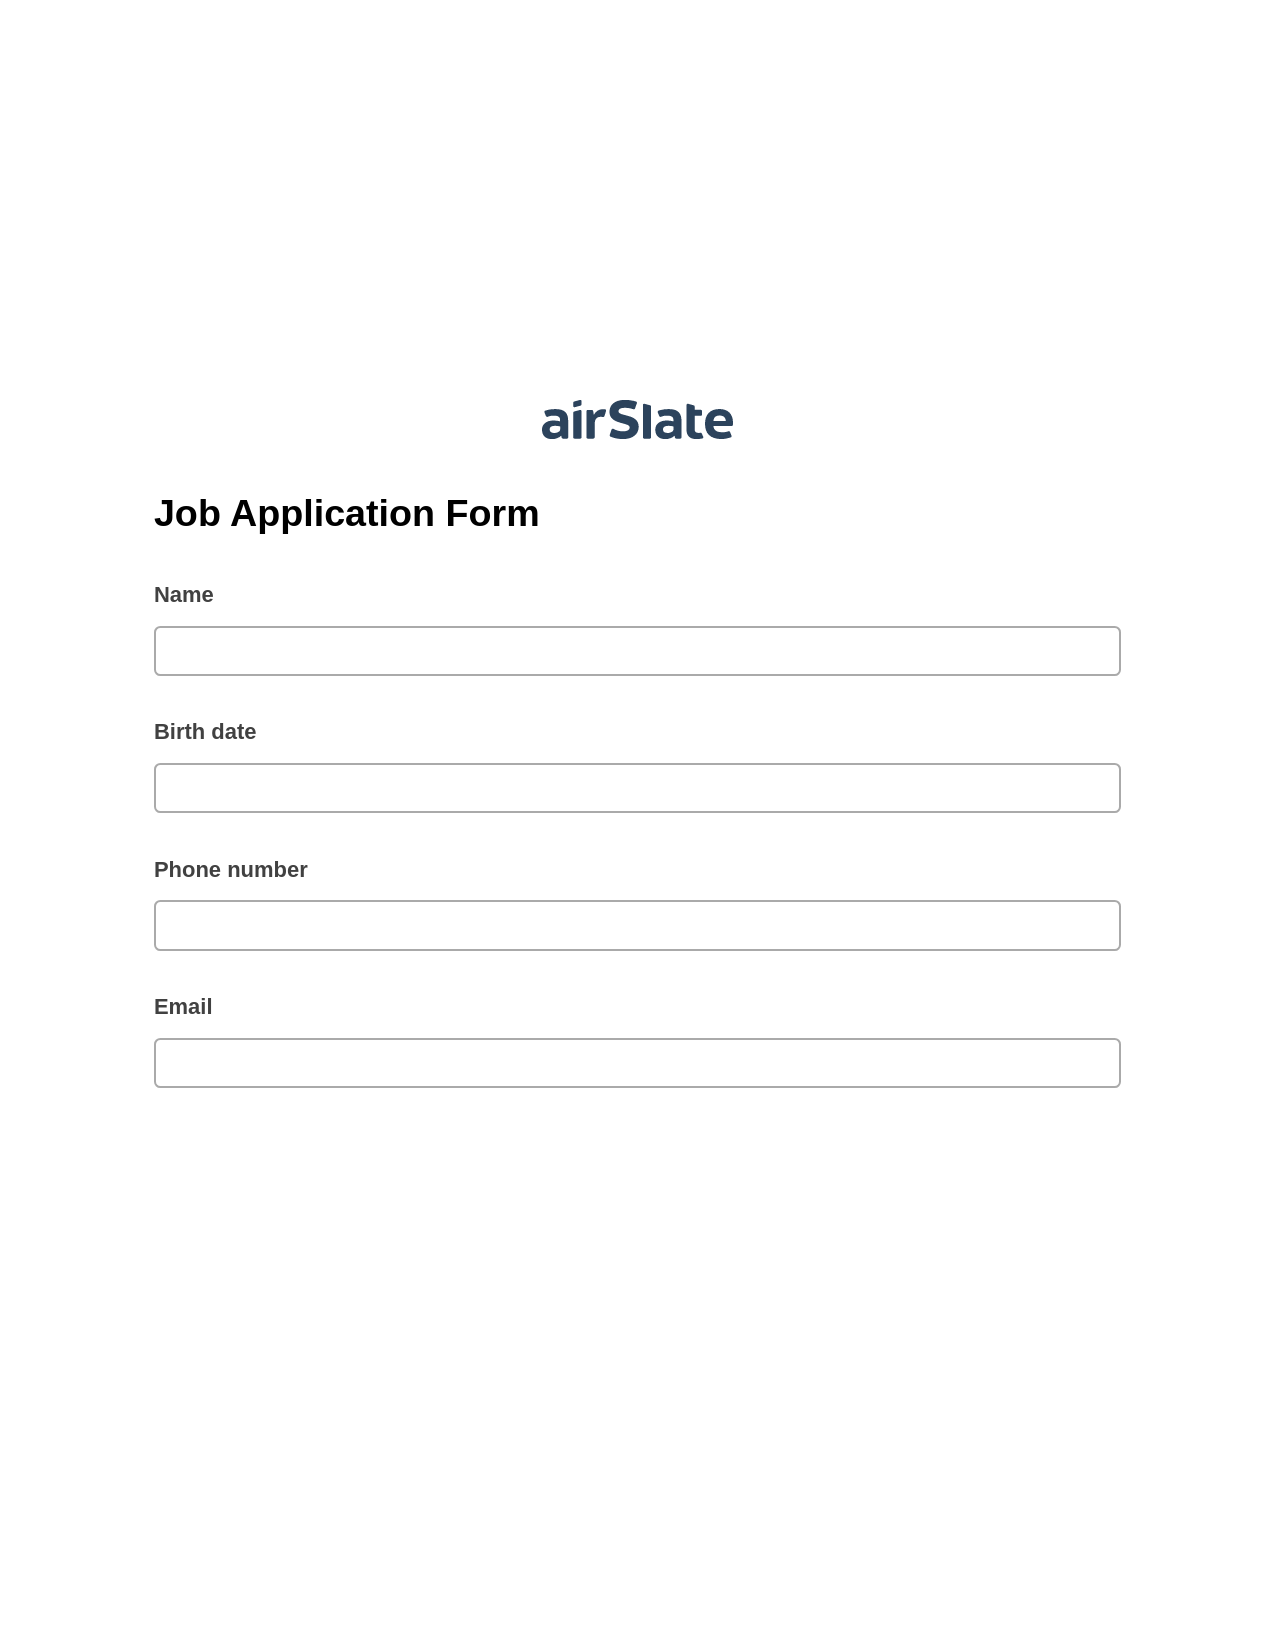 Job Application Form System Bot - Slack Two-Way Binding Bot, Audit Trail Bot, Export to NetSuite Record Bot